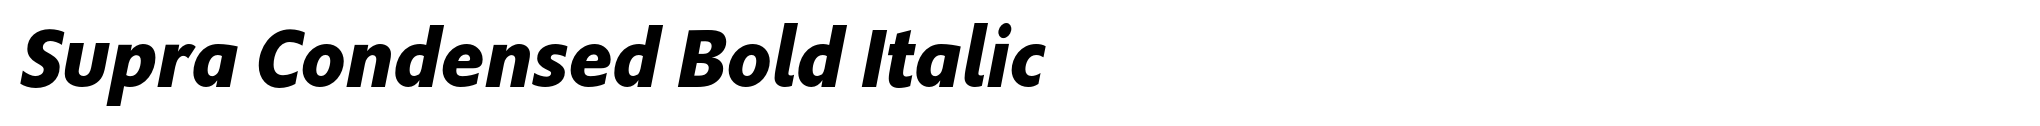 Supra Condensed Bold Italic image